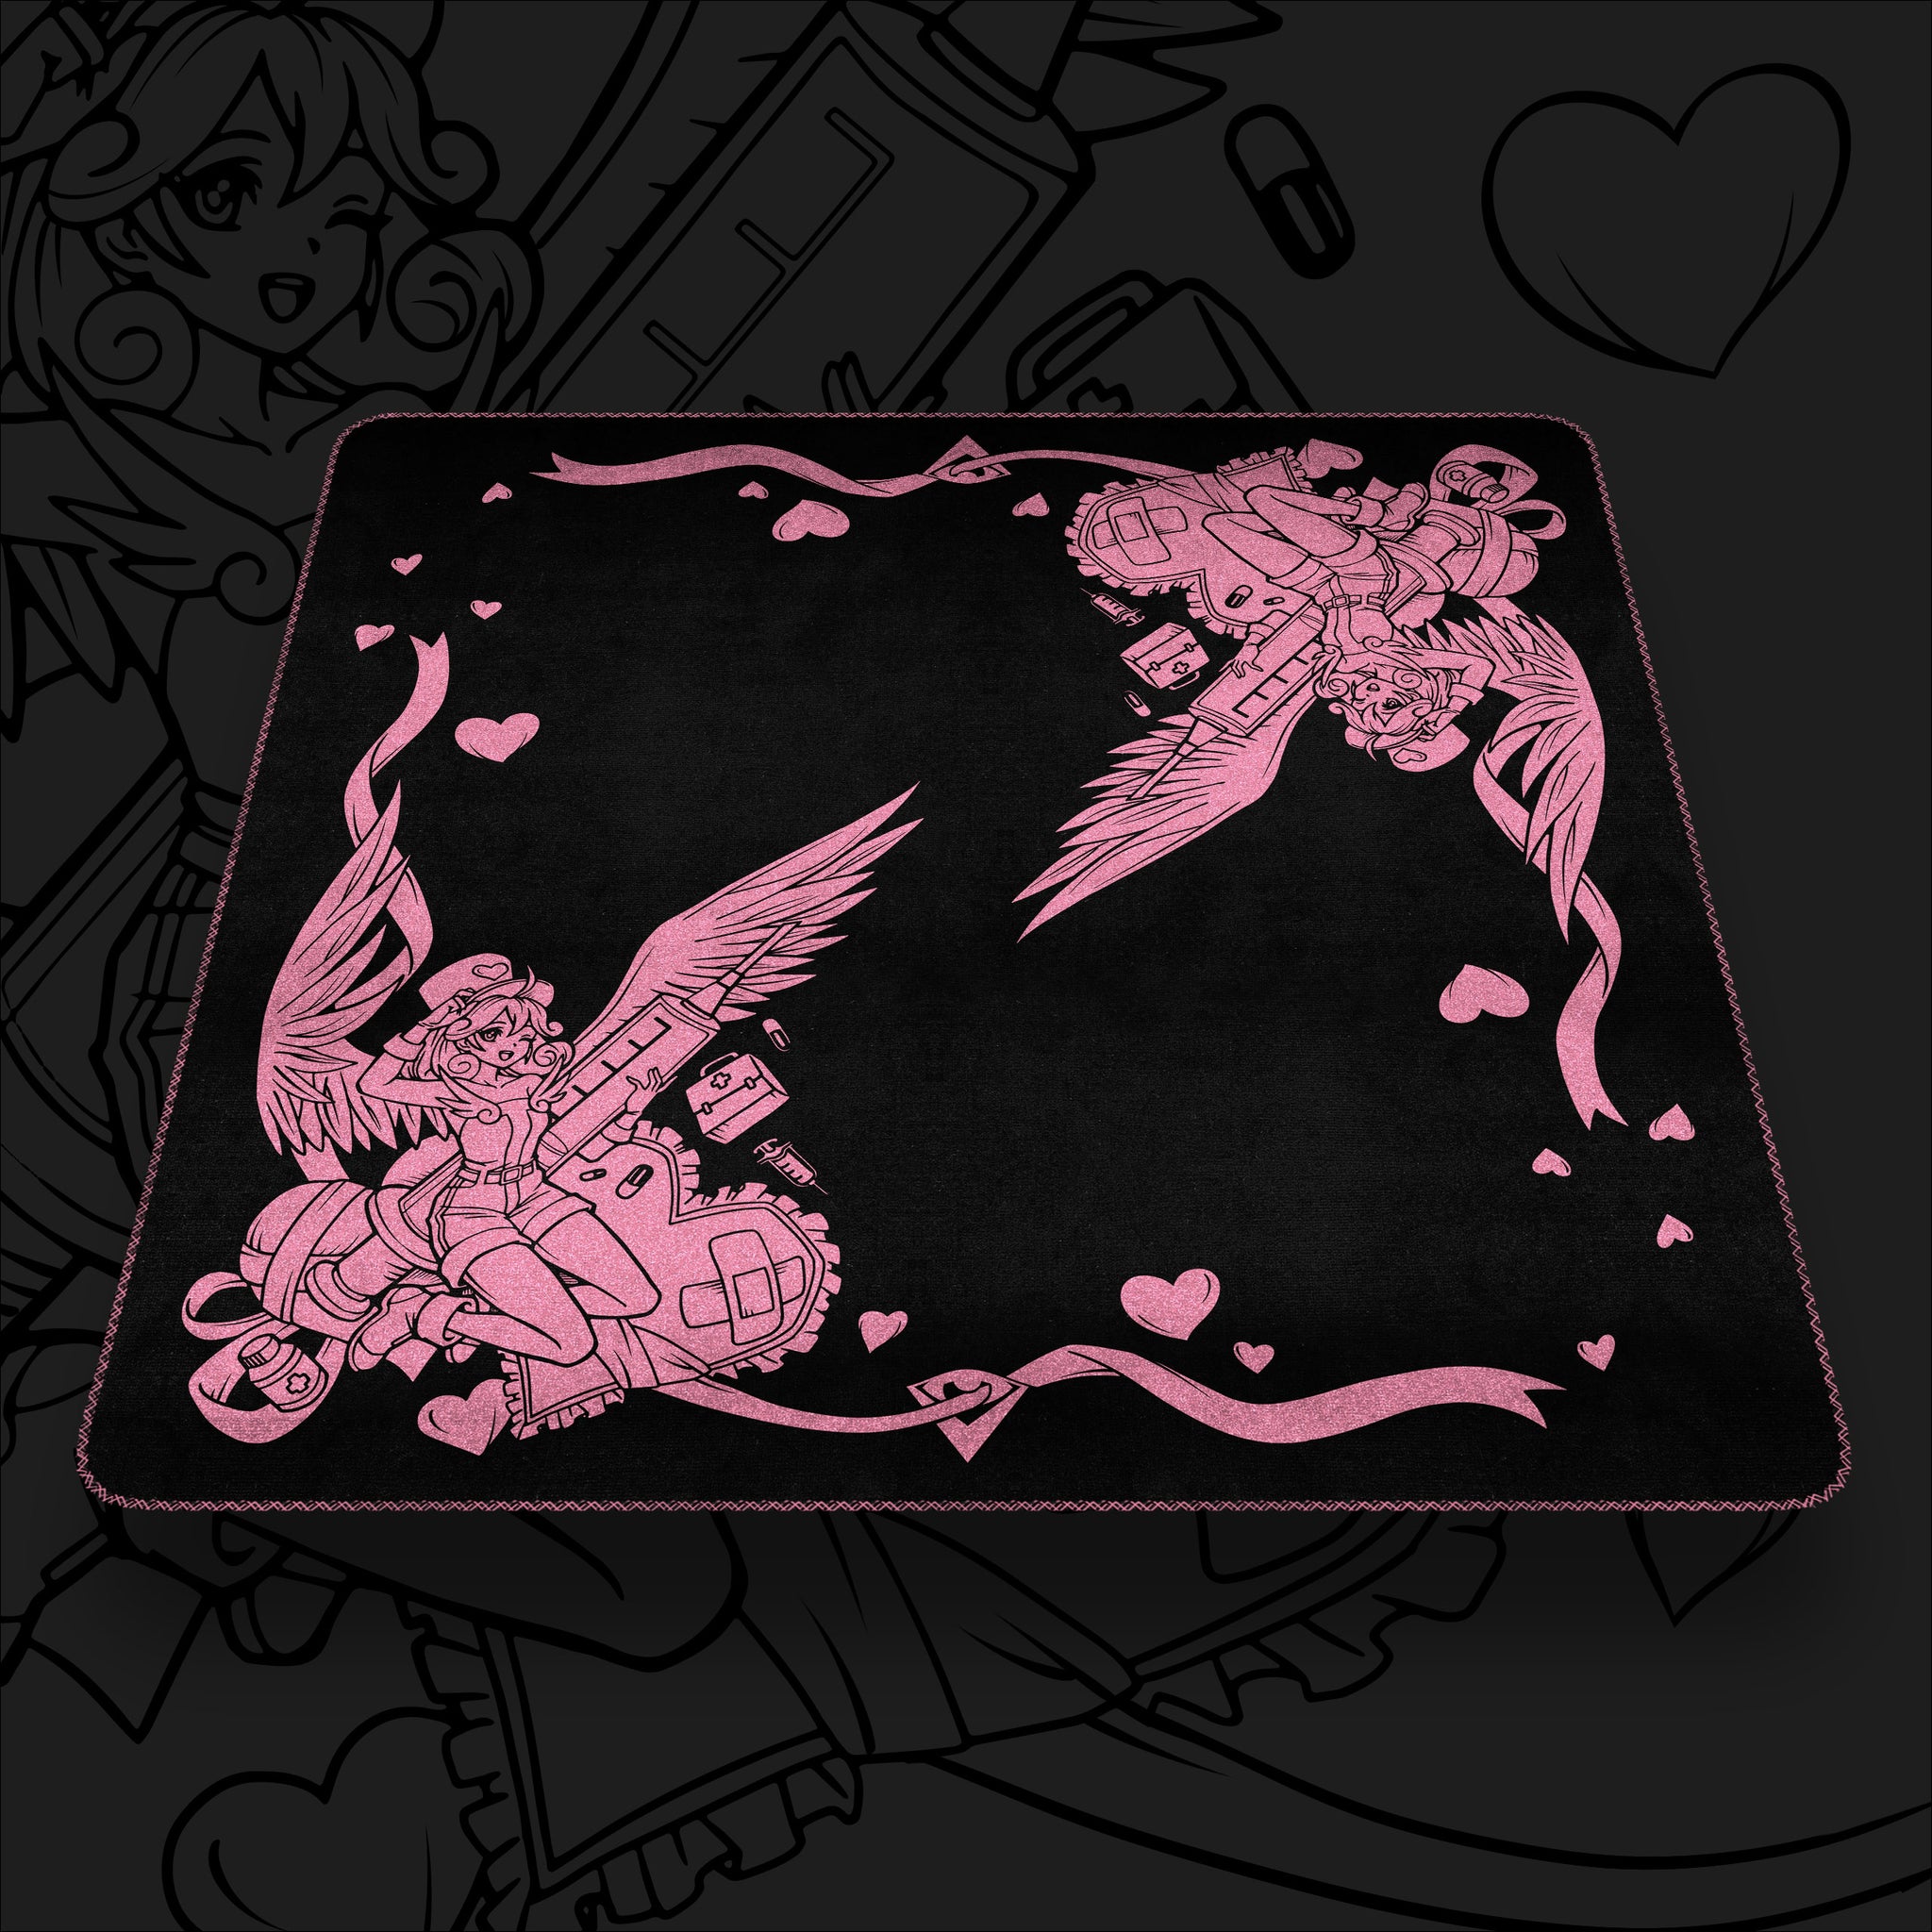 Valentine's Lily | Ultraglide Jet Black x Platinum Rose